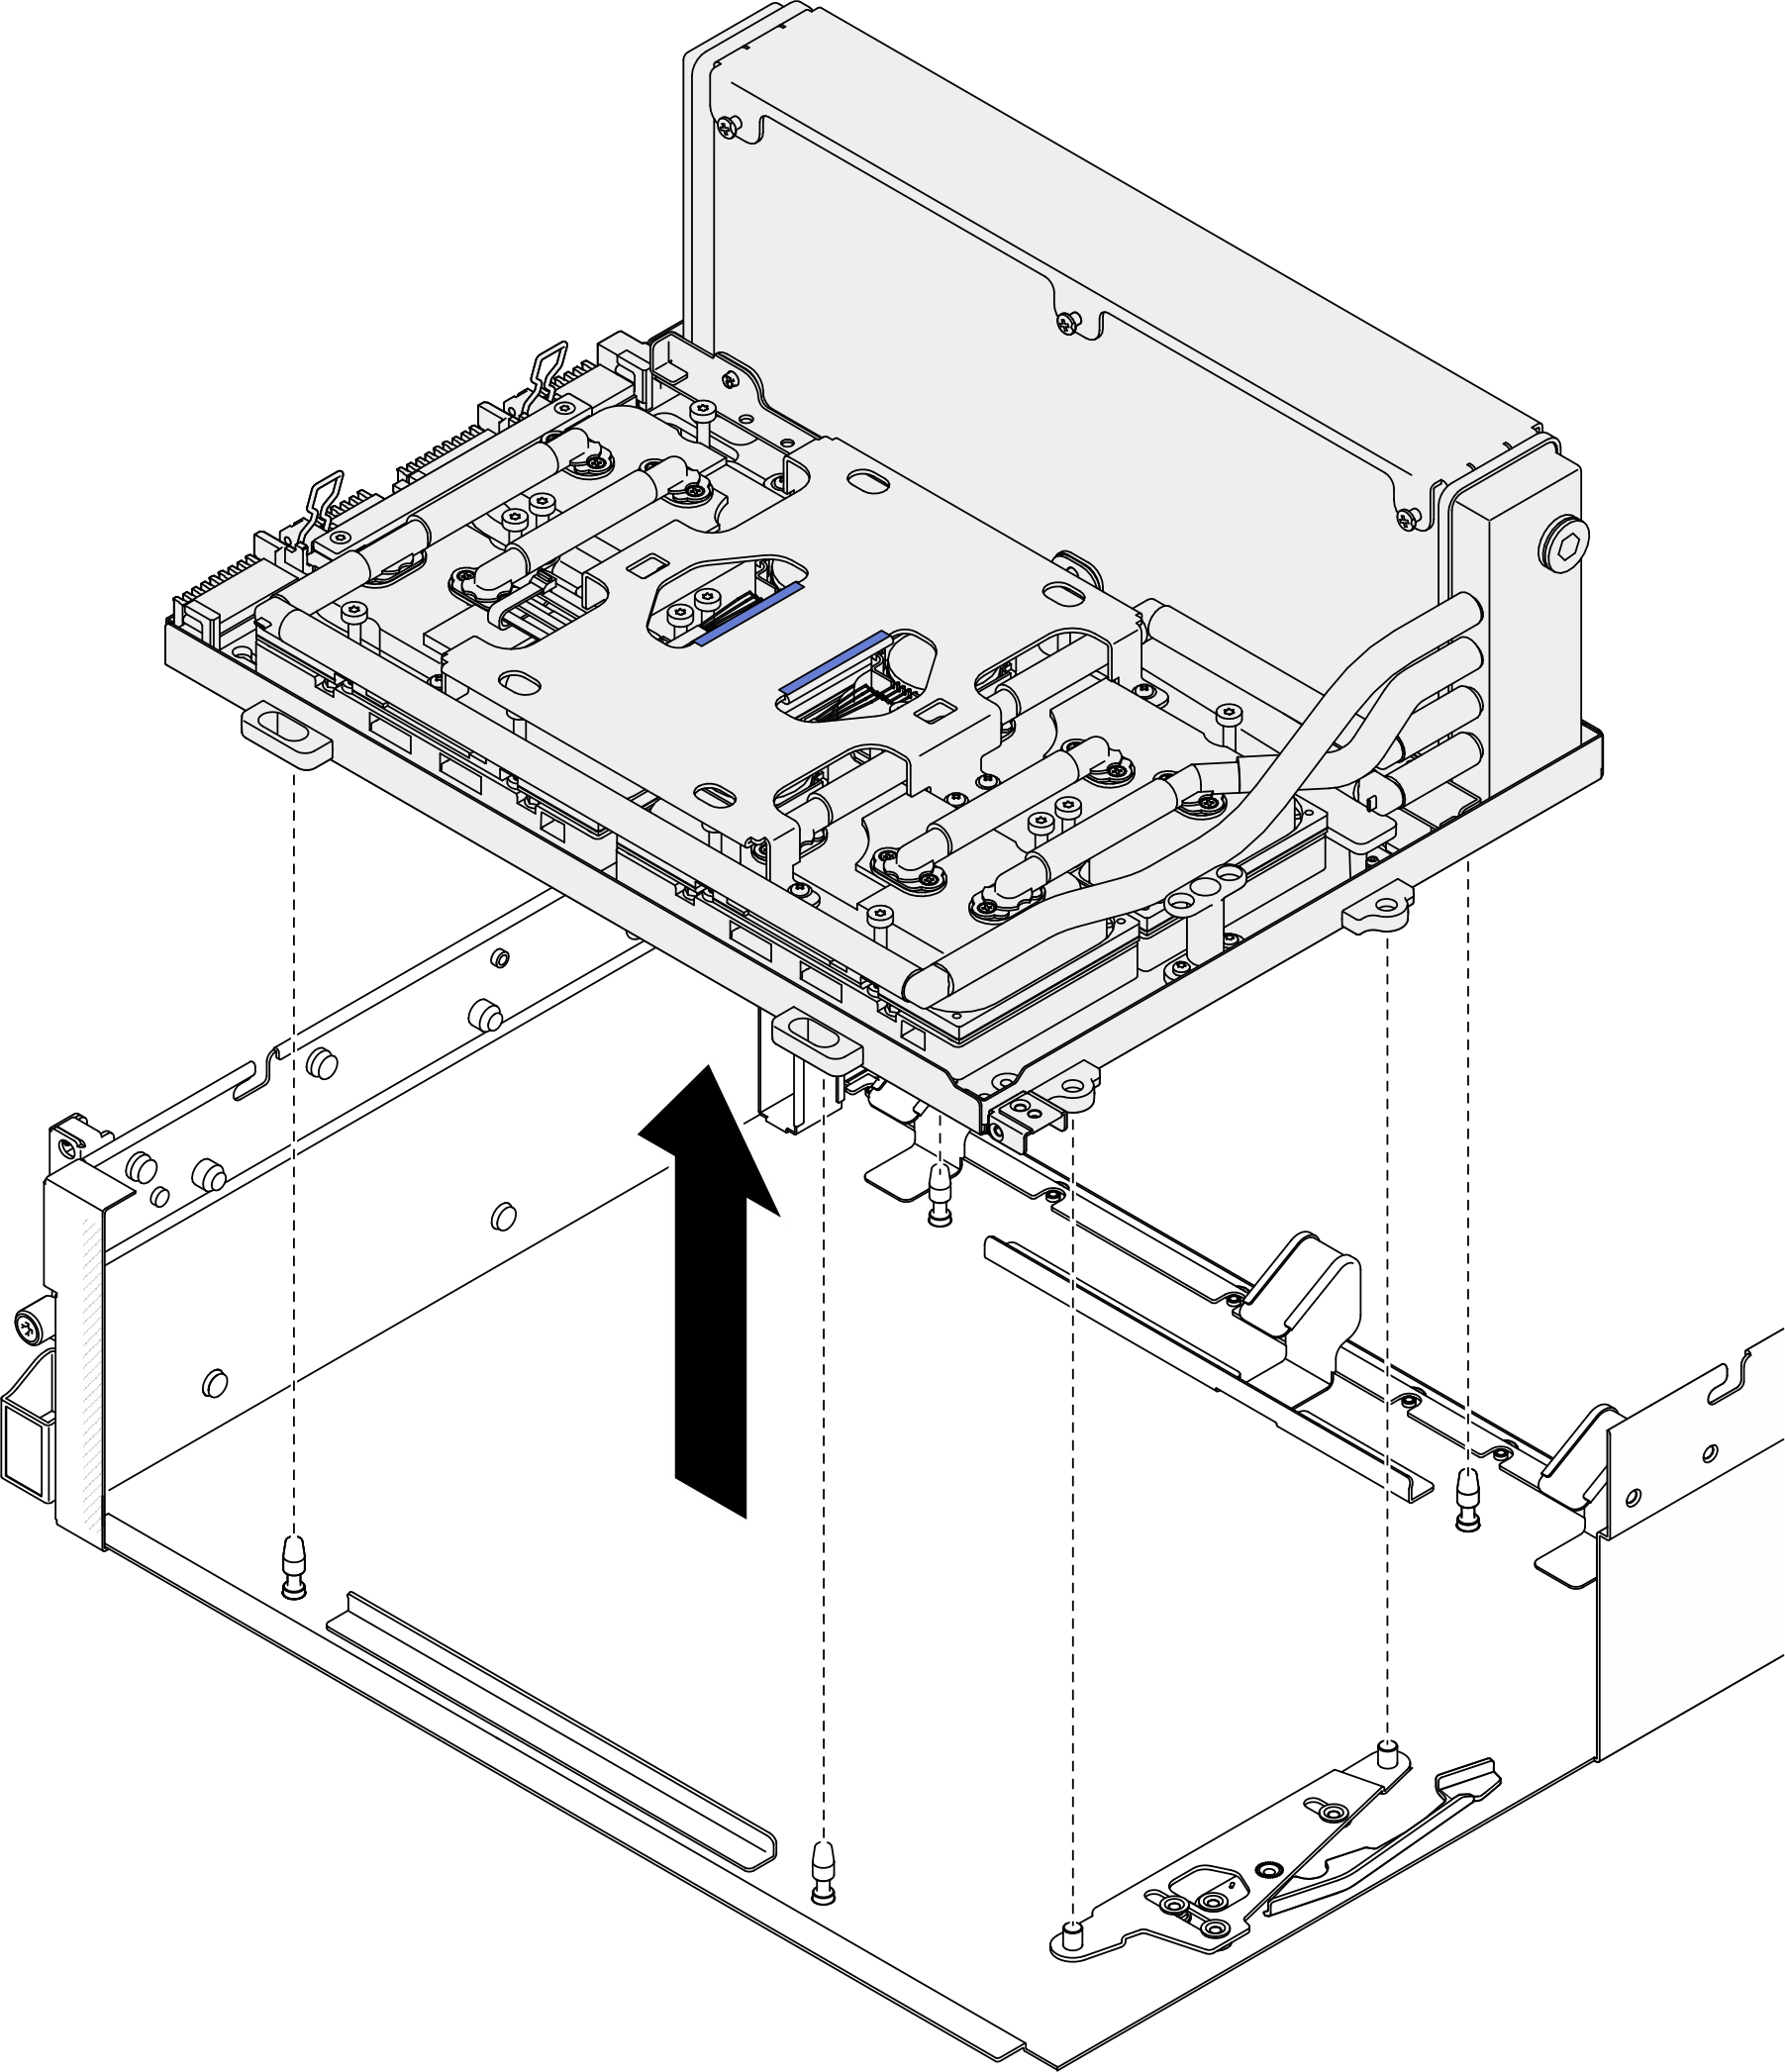 Assemblage du GPU-L2A removal